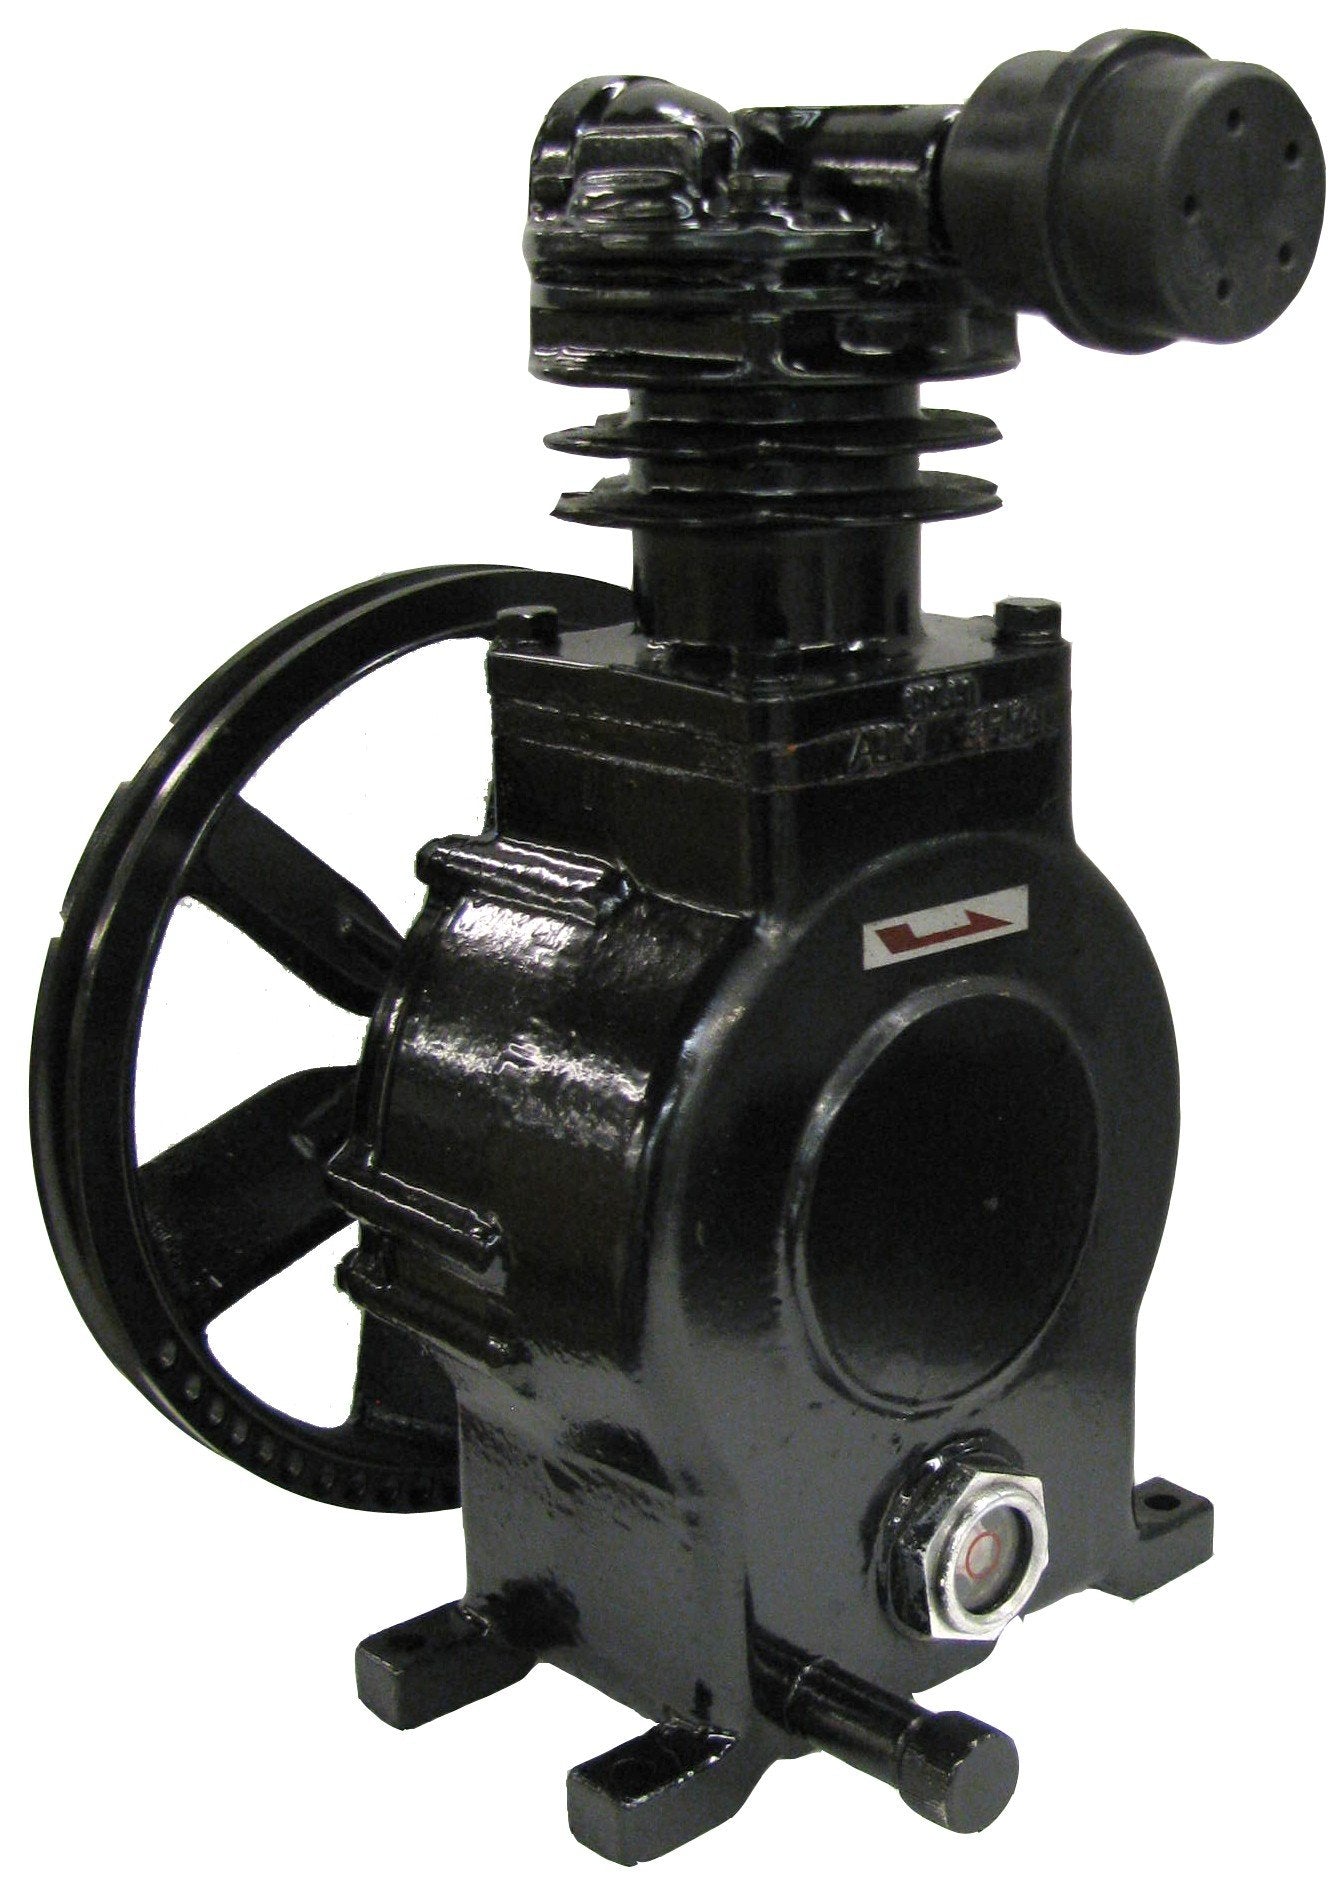 Powerex LPS075A Lubricated Reciprocating Air Compressor  Pump